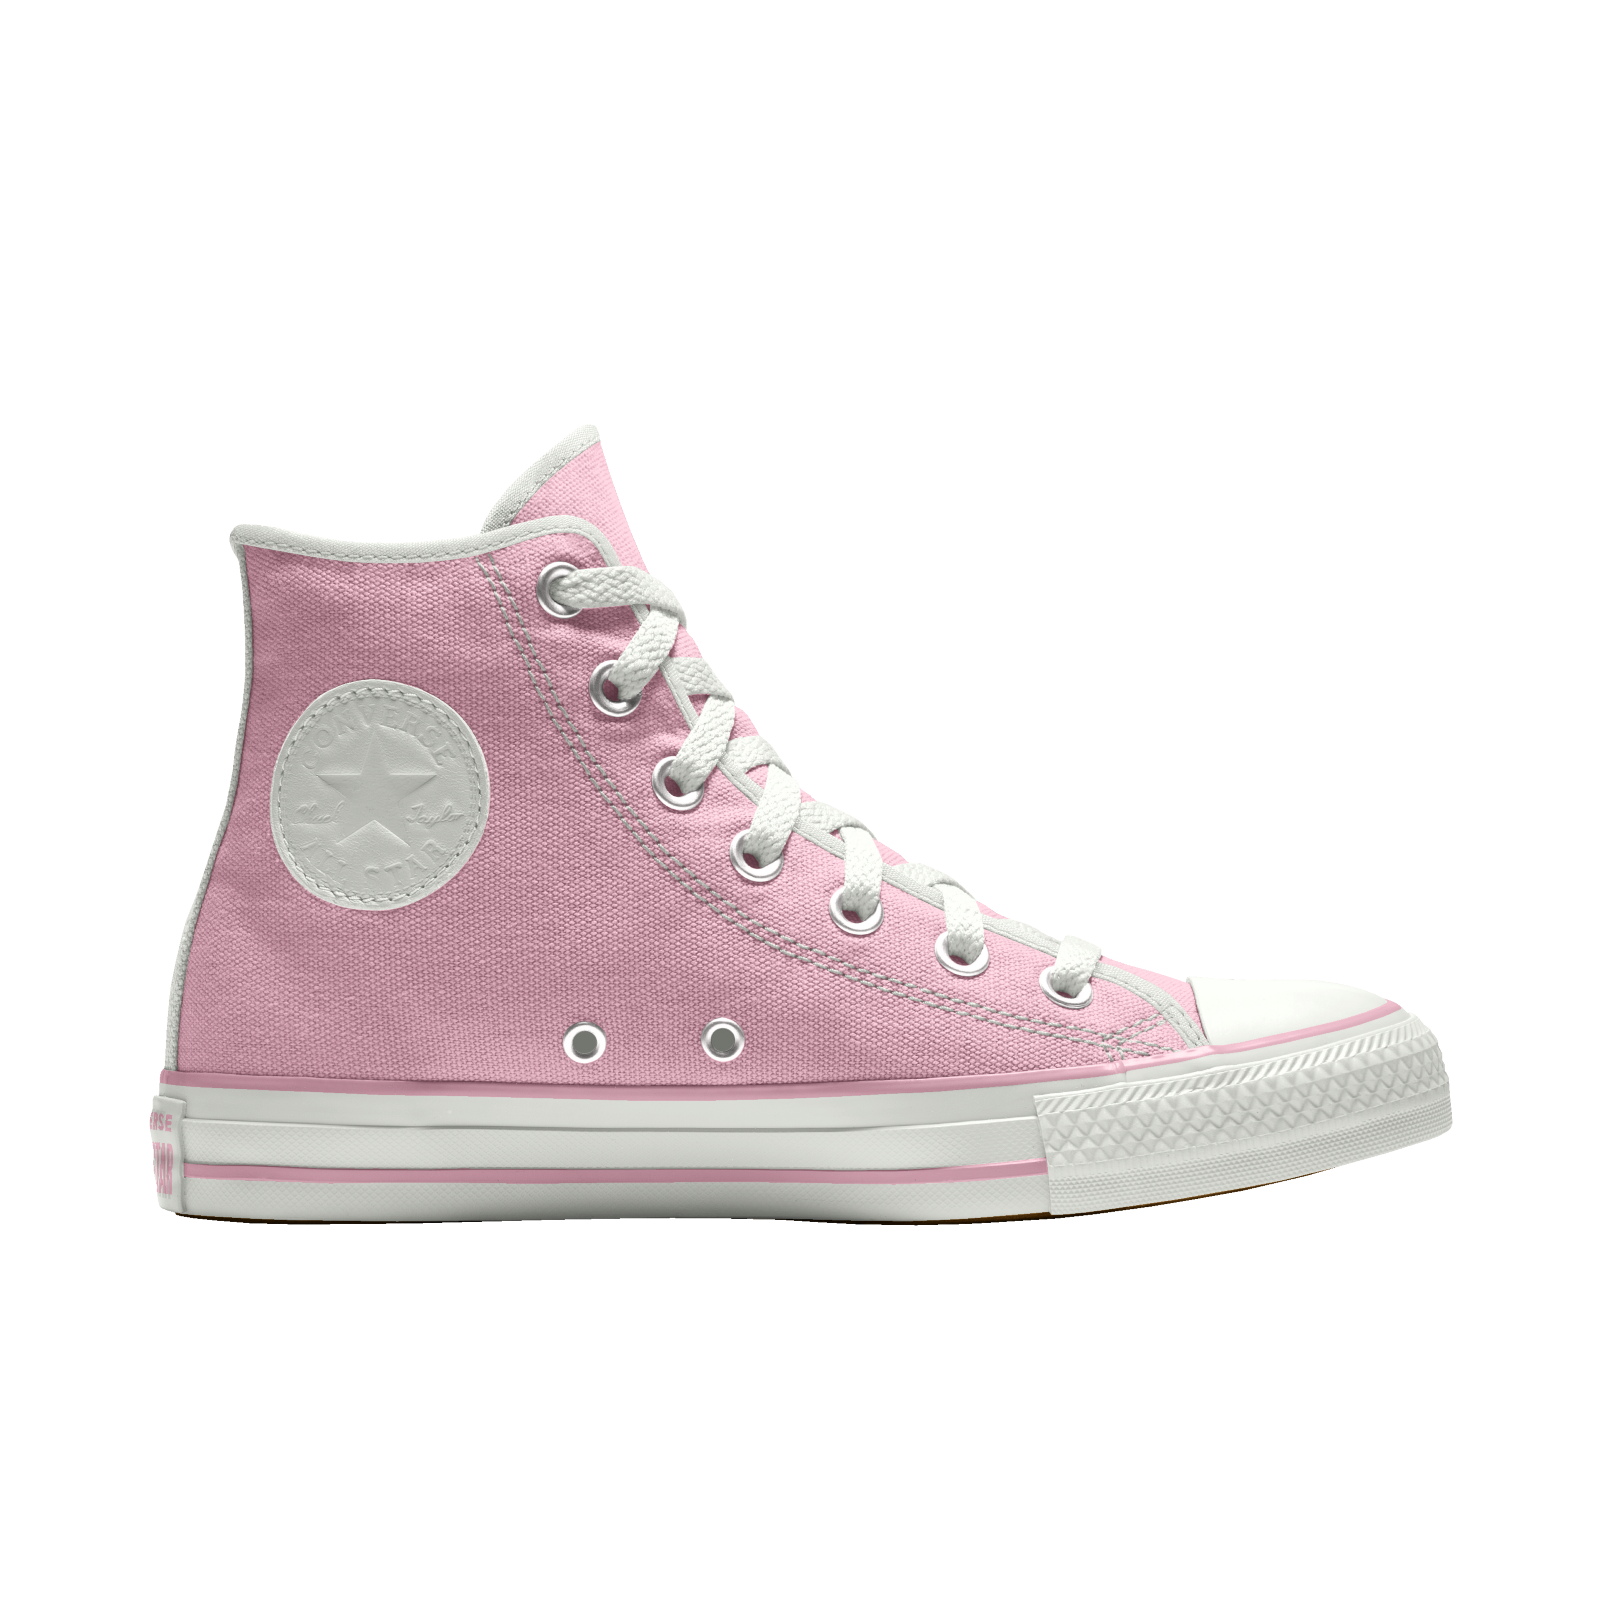 Pale pink converse